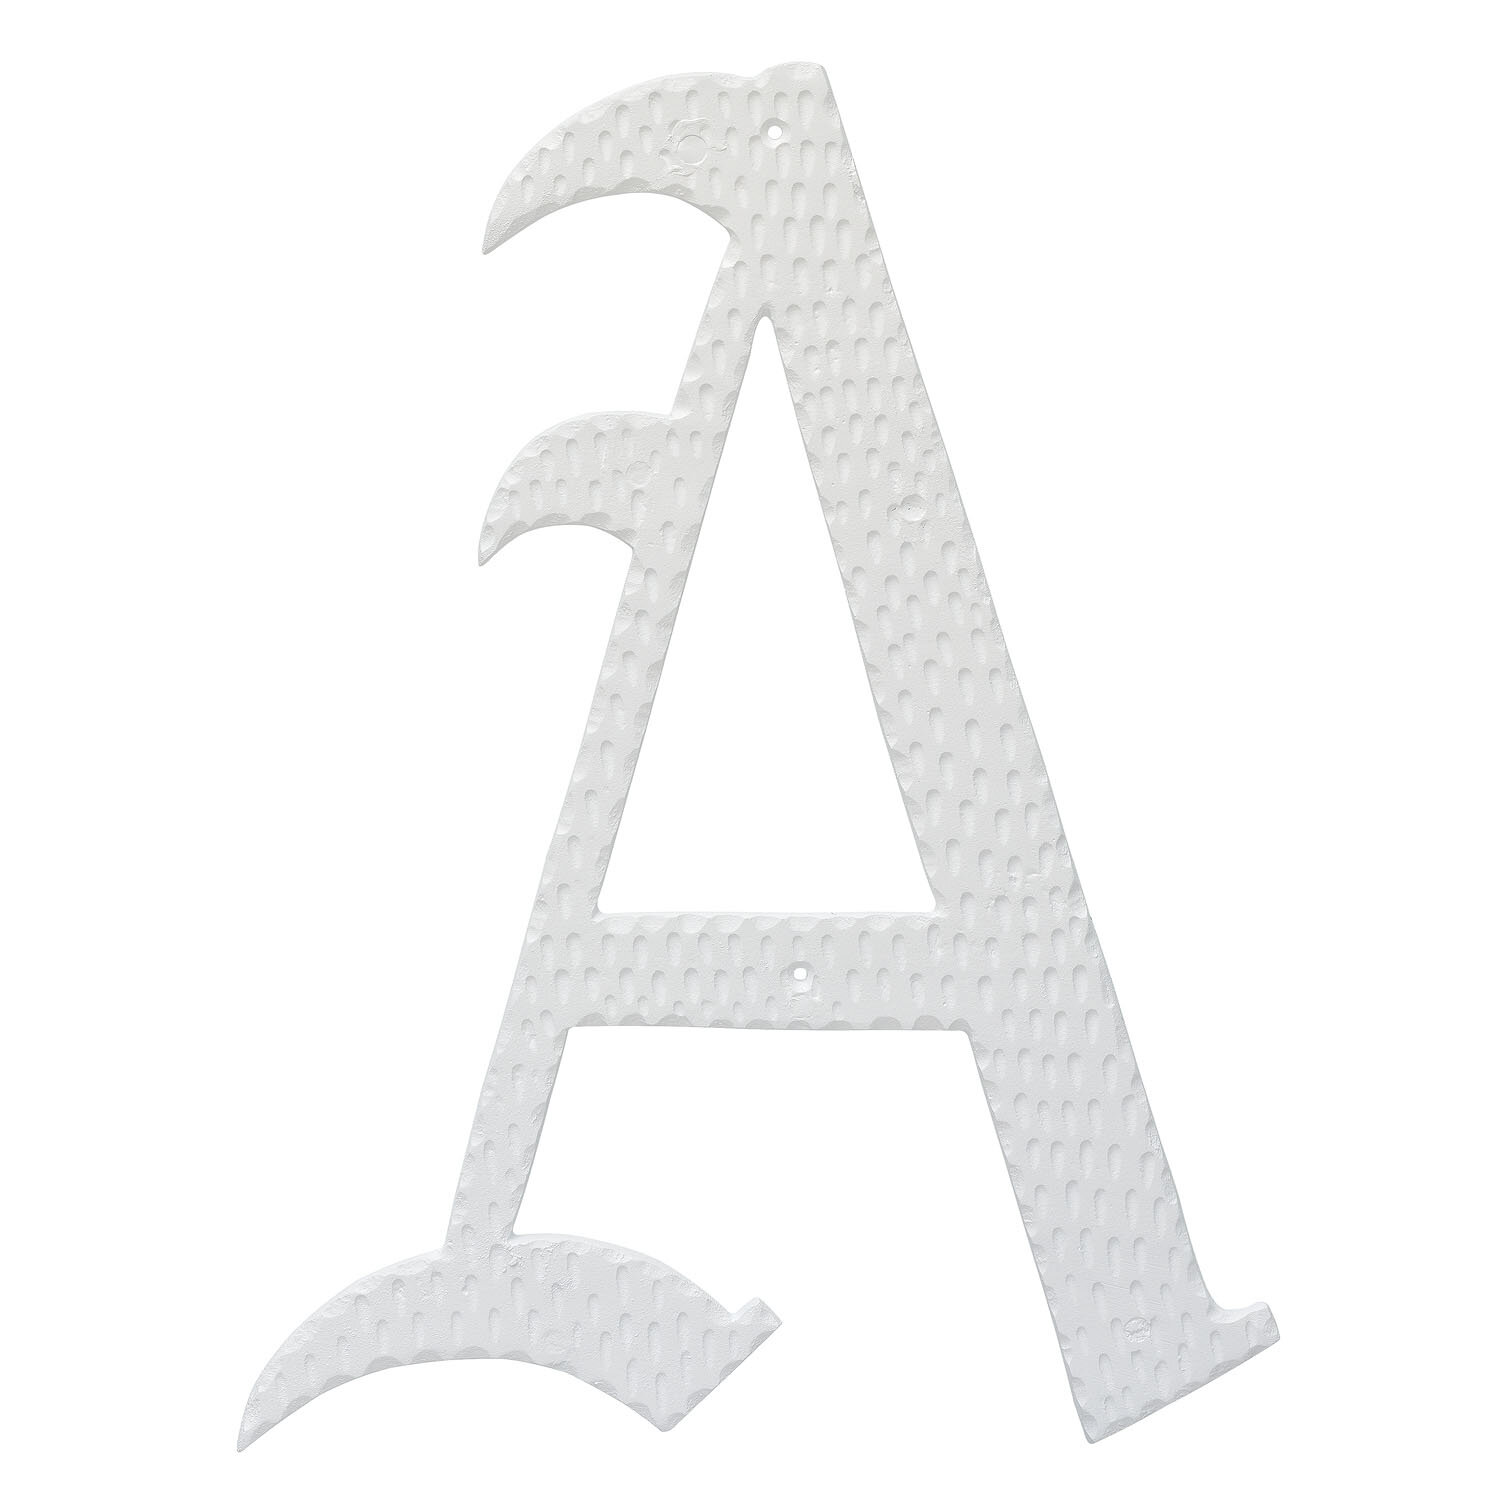 Chimney Letter - Tall 16 Monogram Metal Letters In Black or White